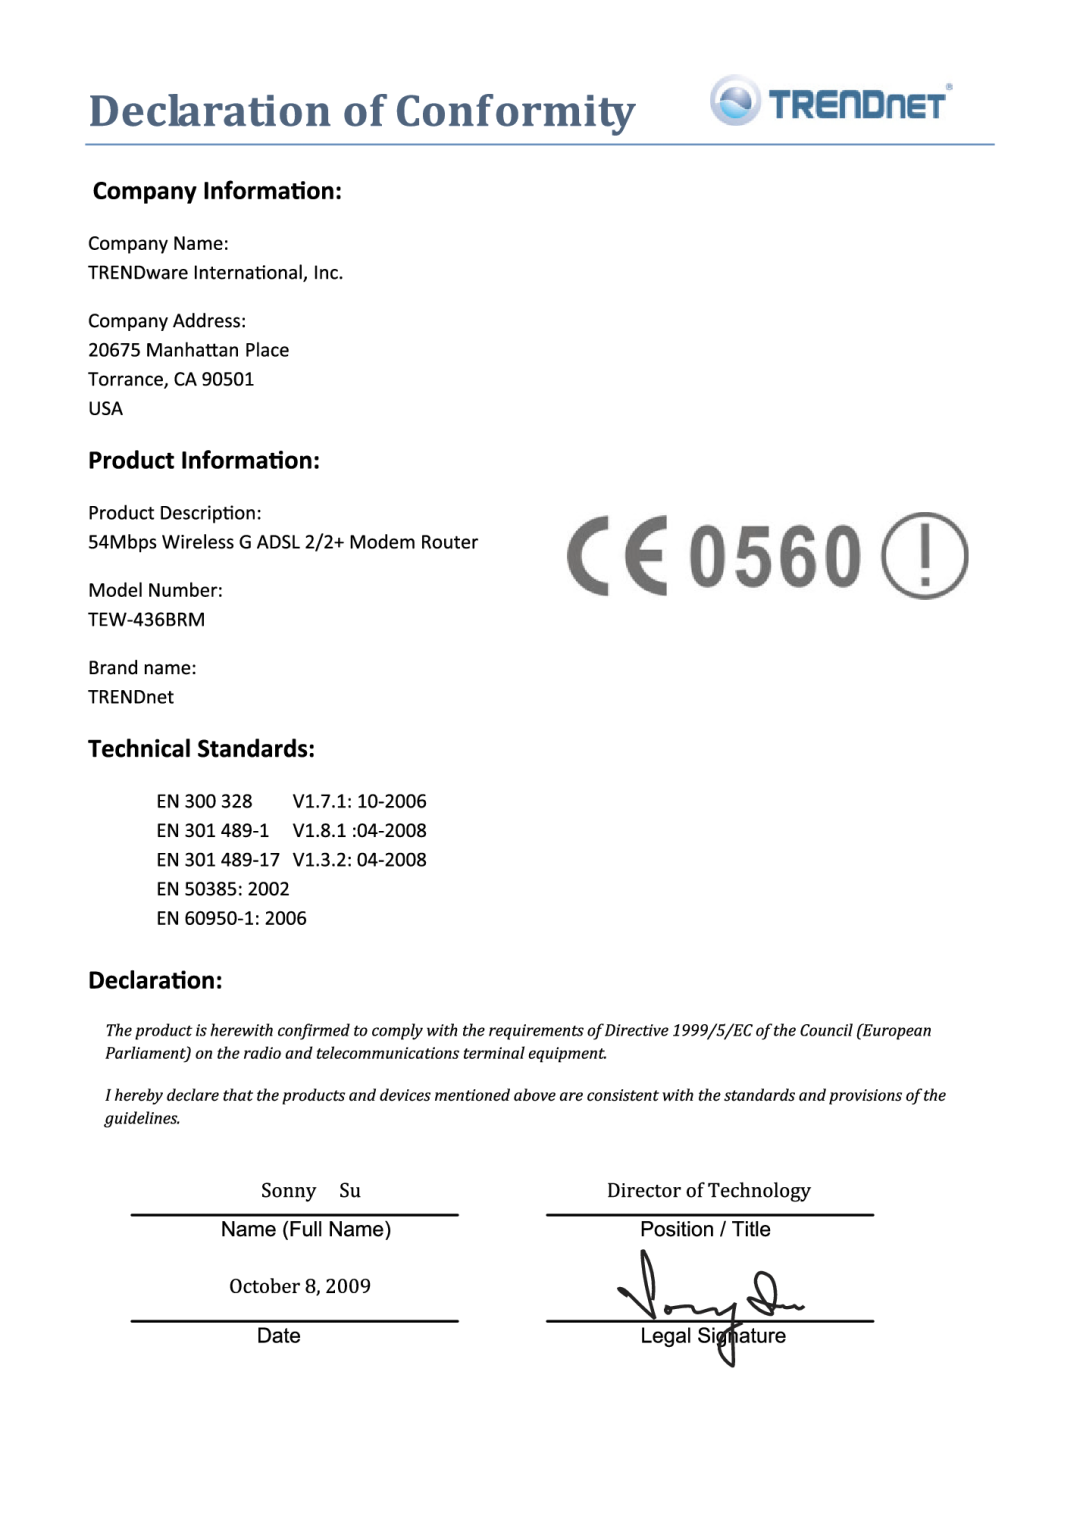 TRENDnet TEW-436BRM, Wireless ADSL Modem Router manual 